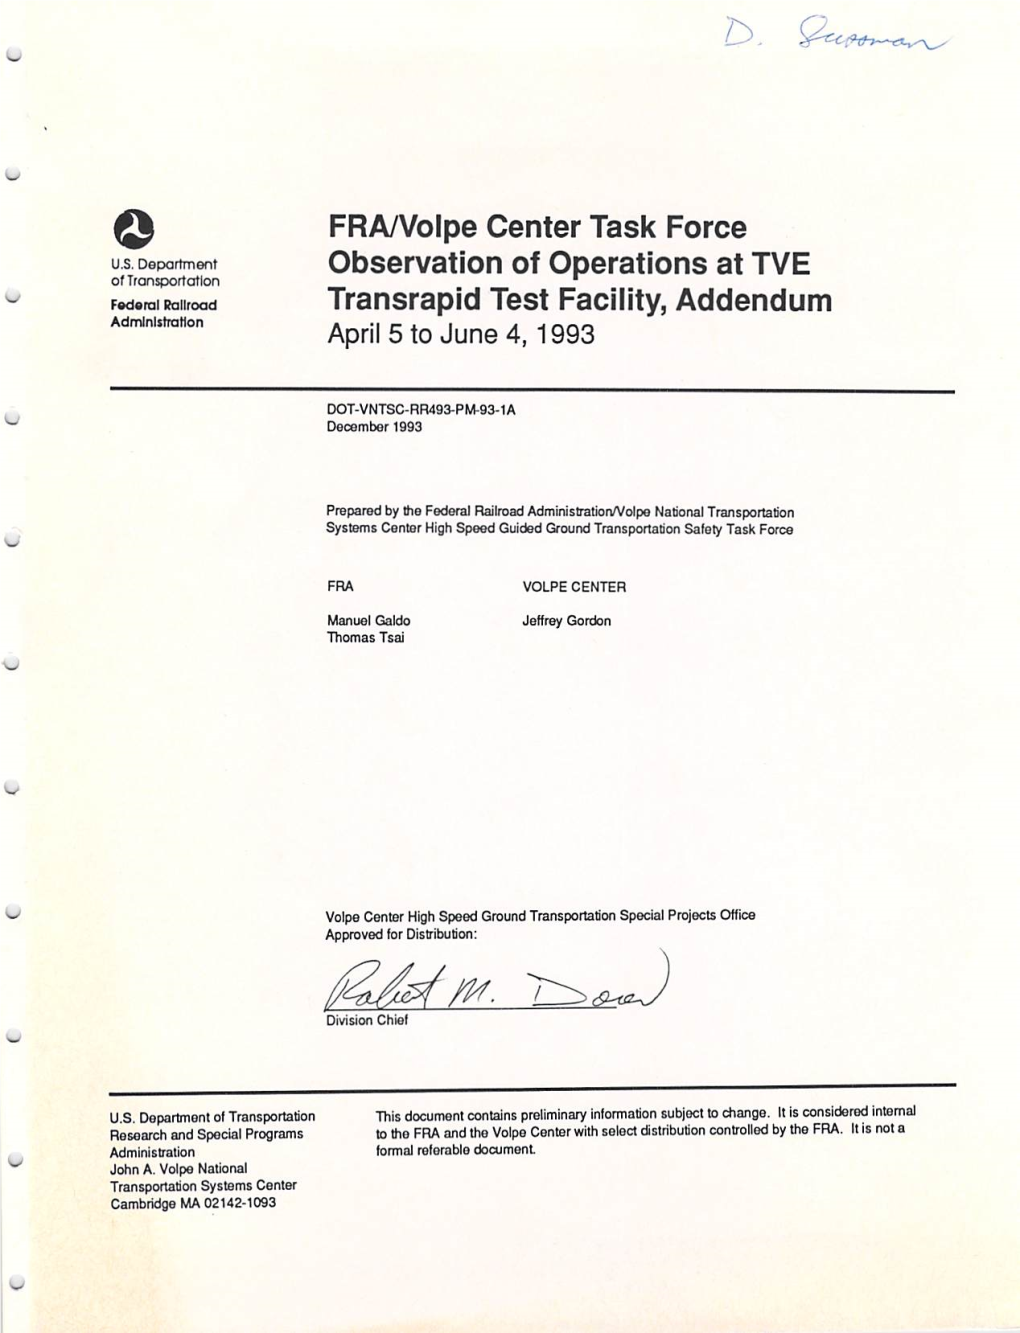 Transrapid Test Facility, Addendum Administration April 5 to June 4,1993